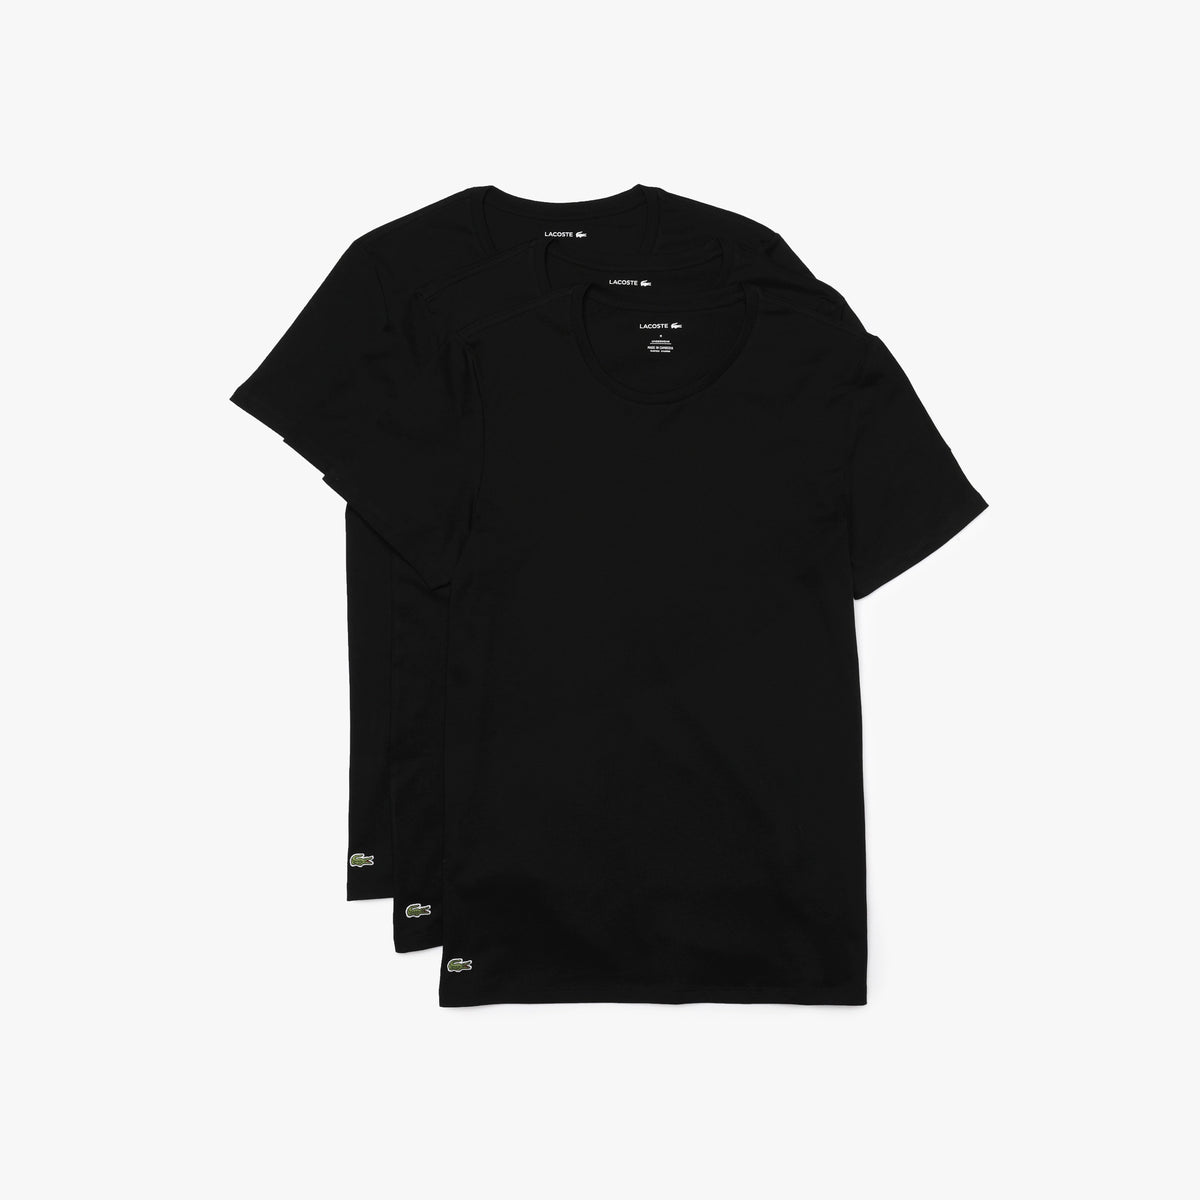 Men's 3 Pack of Plain Slim Crew Neck T-shirts - Black